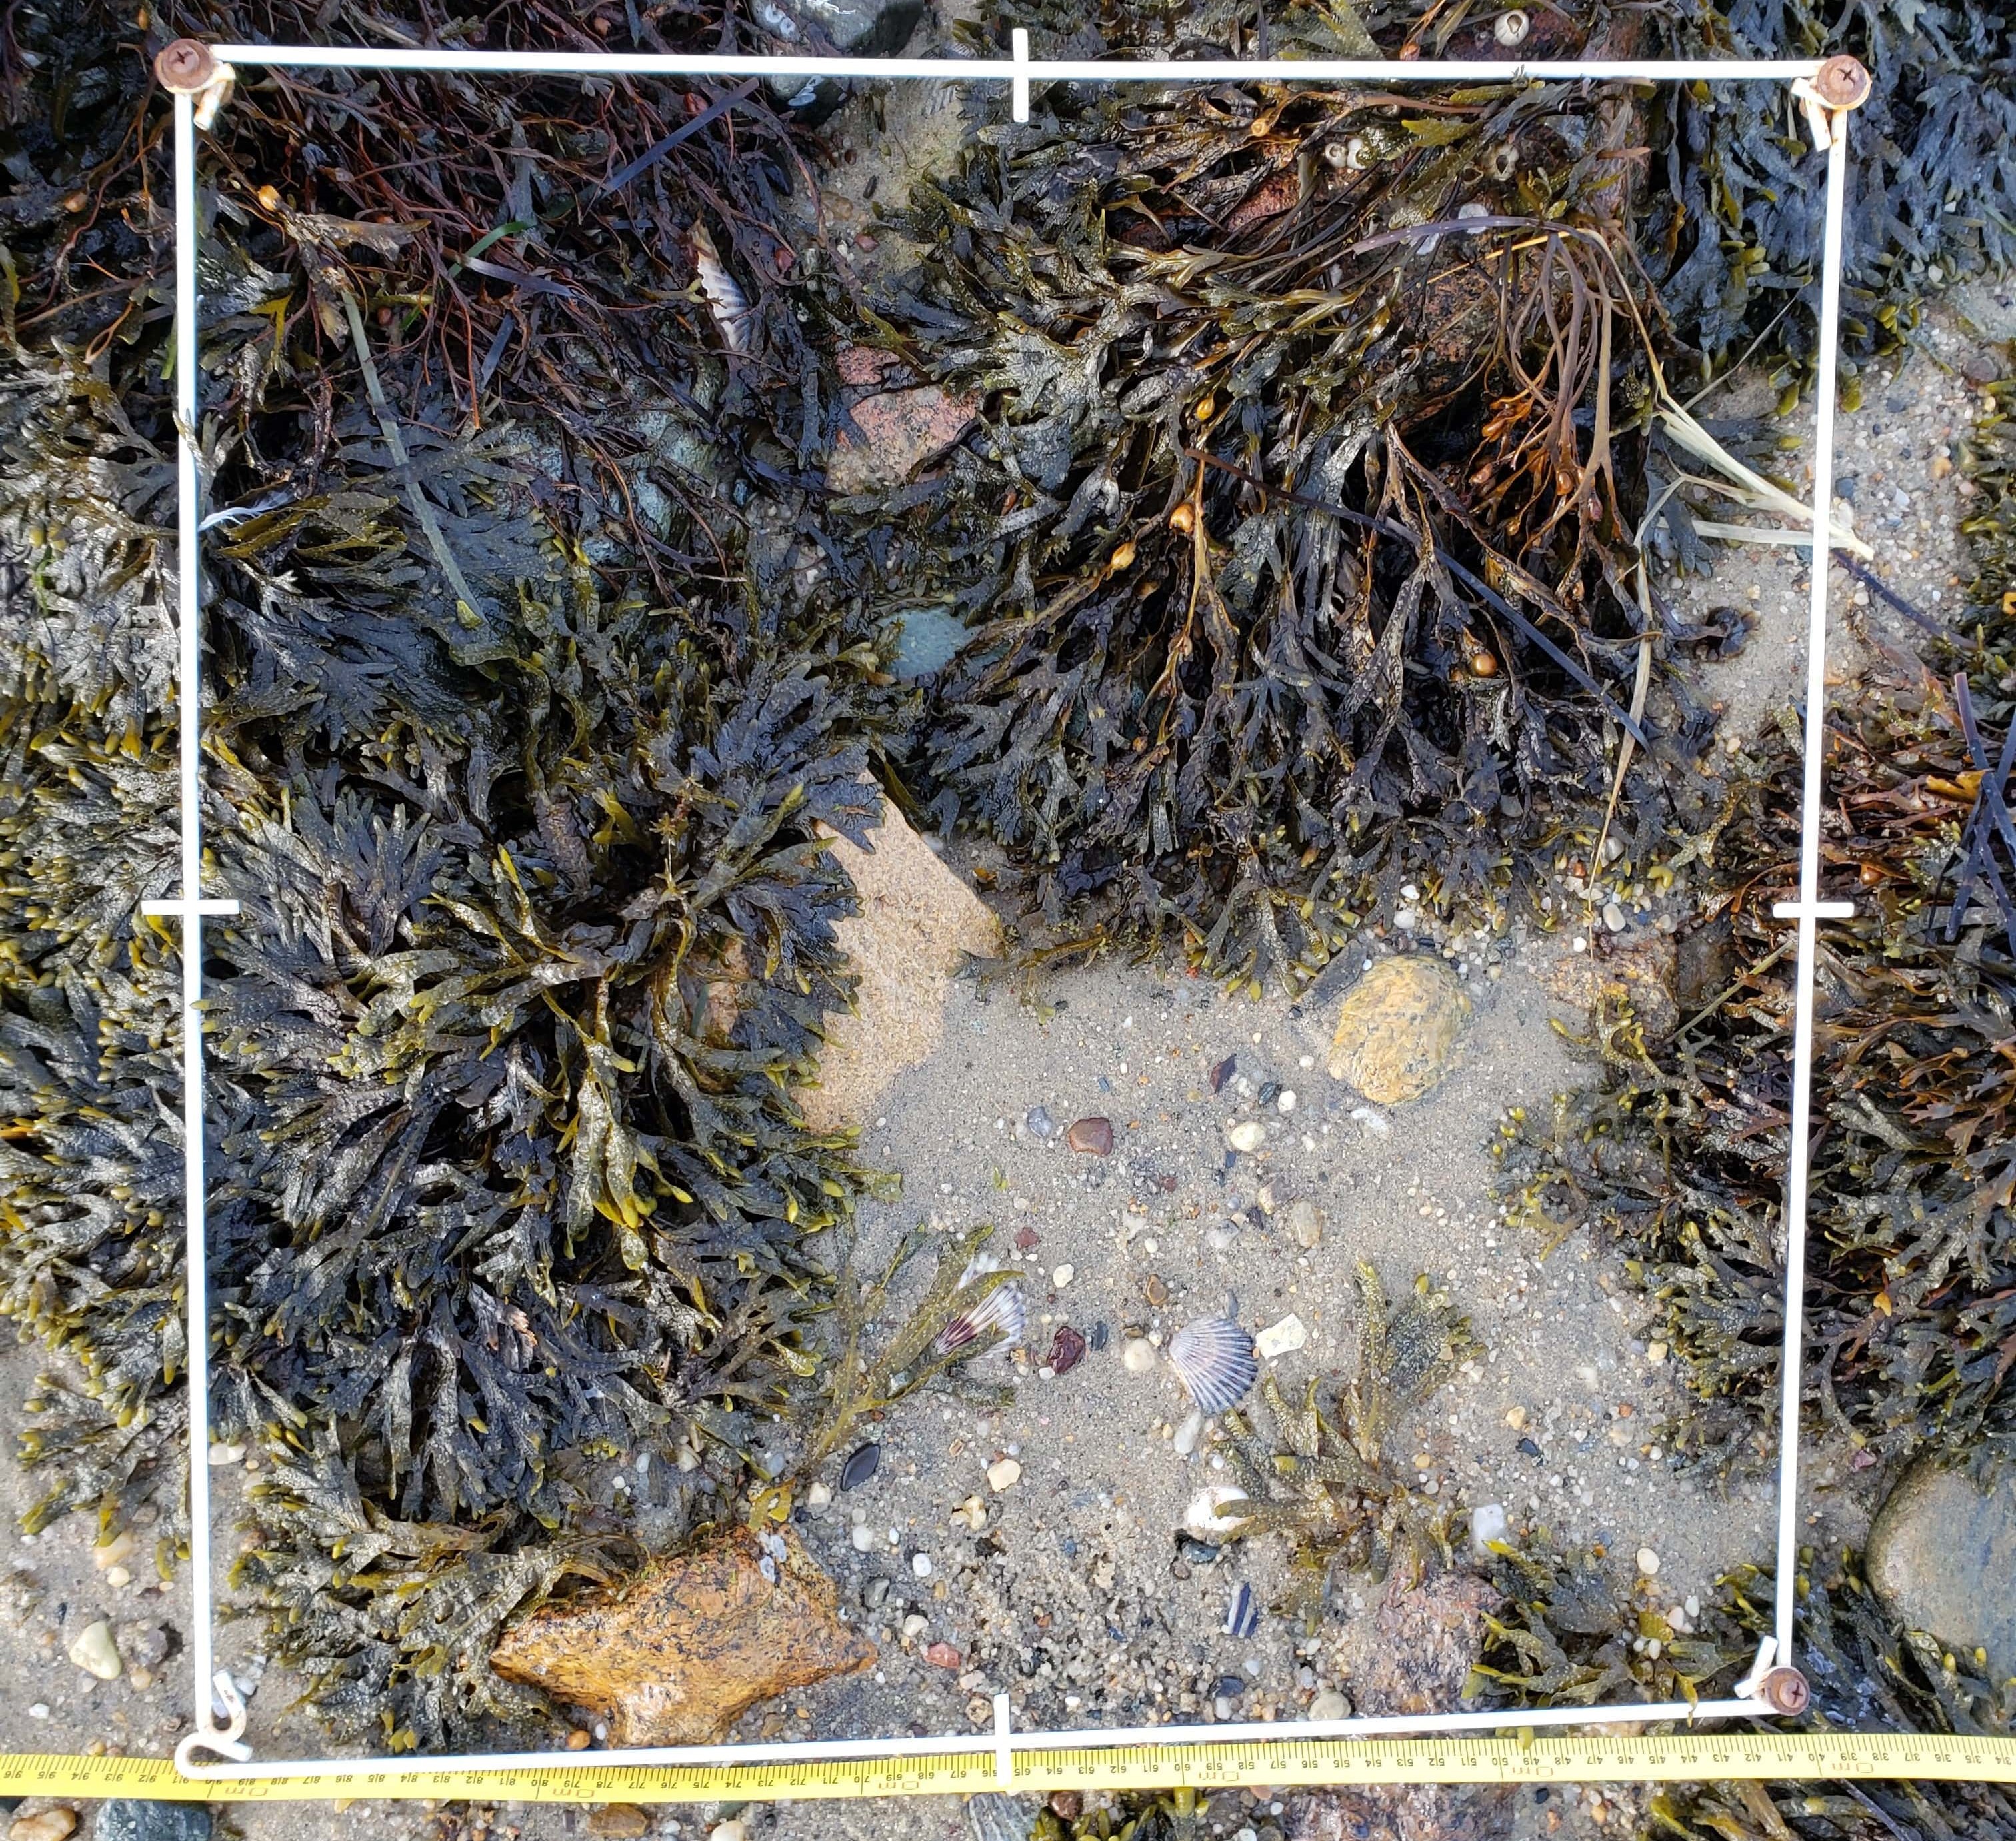 A framed quadrat is placed over algae and snails on the beach